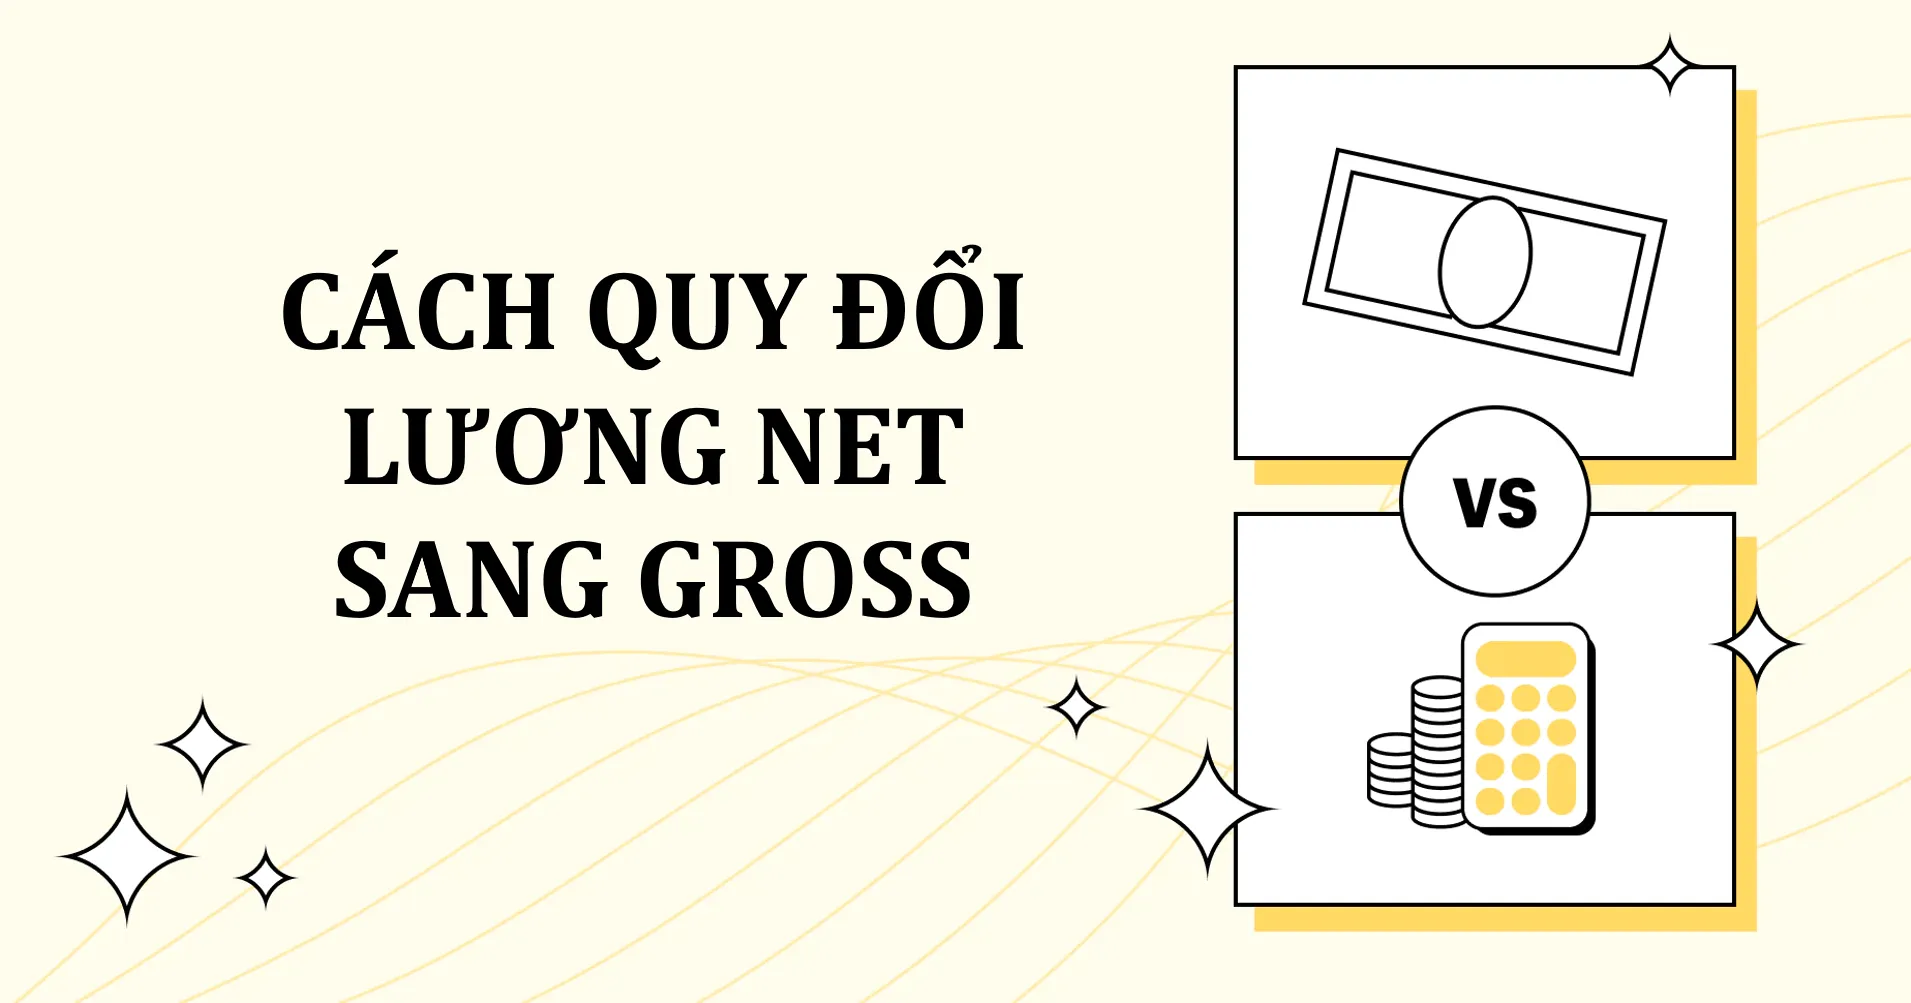 quy đổi lương net sang gross online